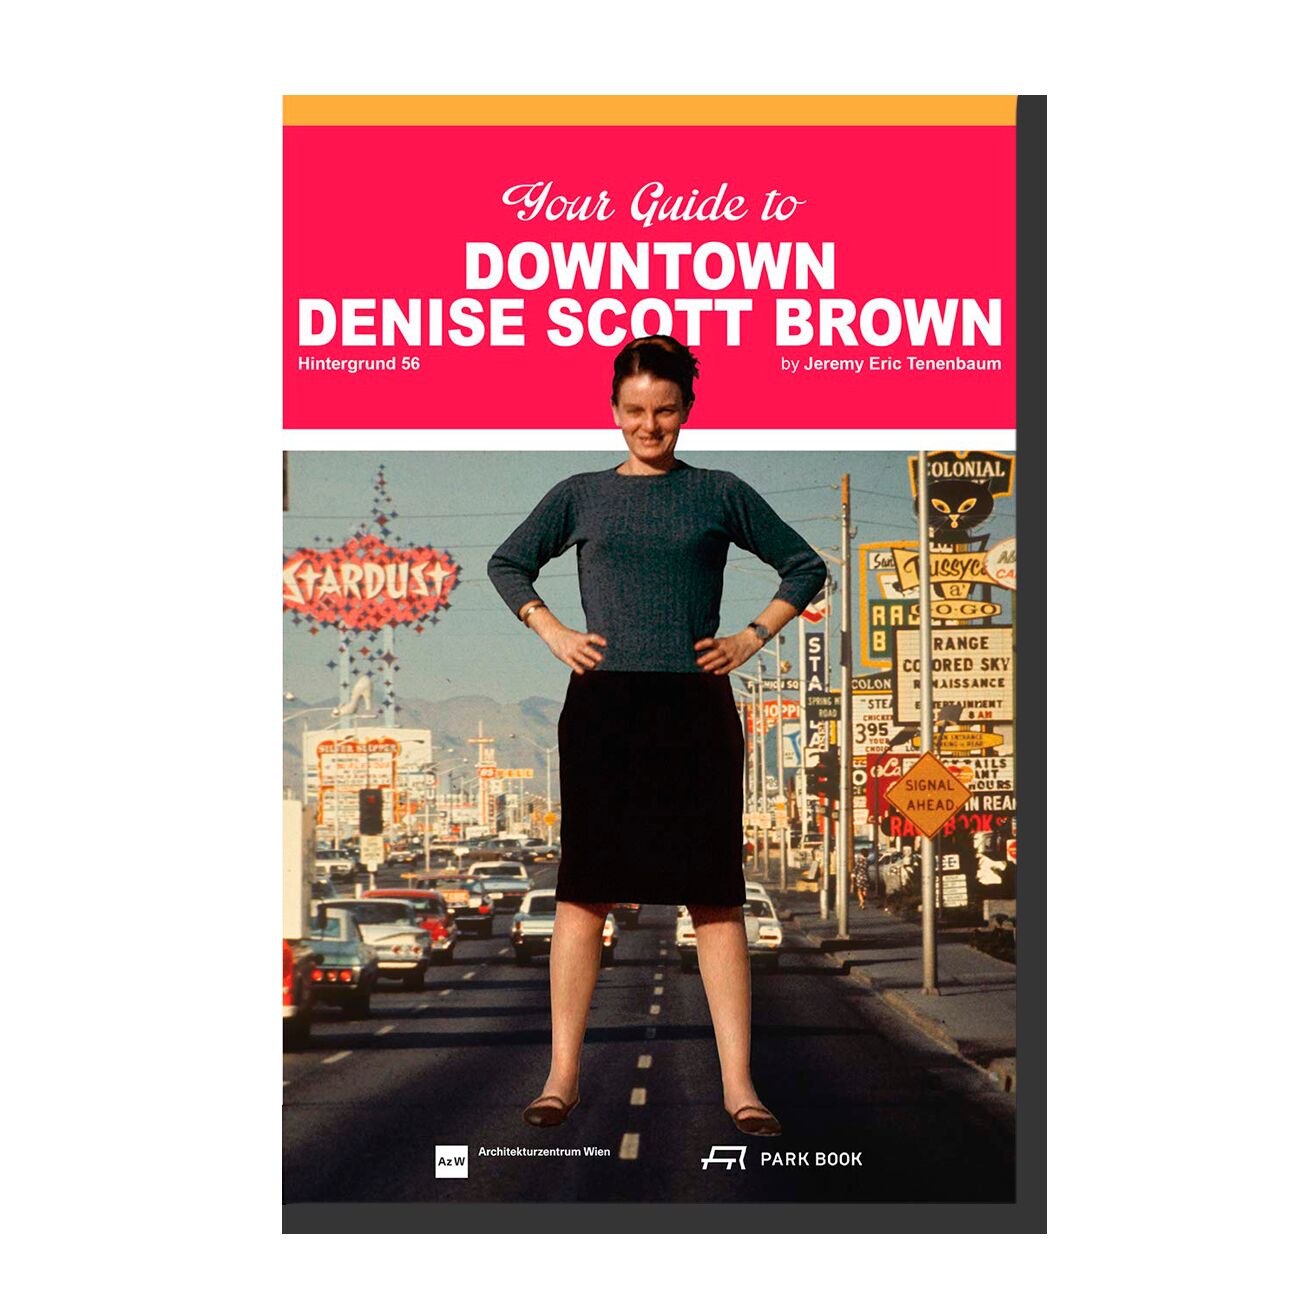 Your Guide to Downtown Denise Scott Brown: Hintergrund 56 